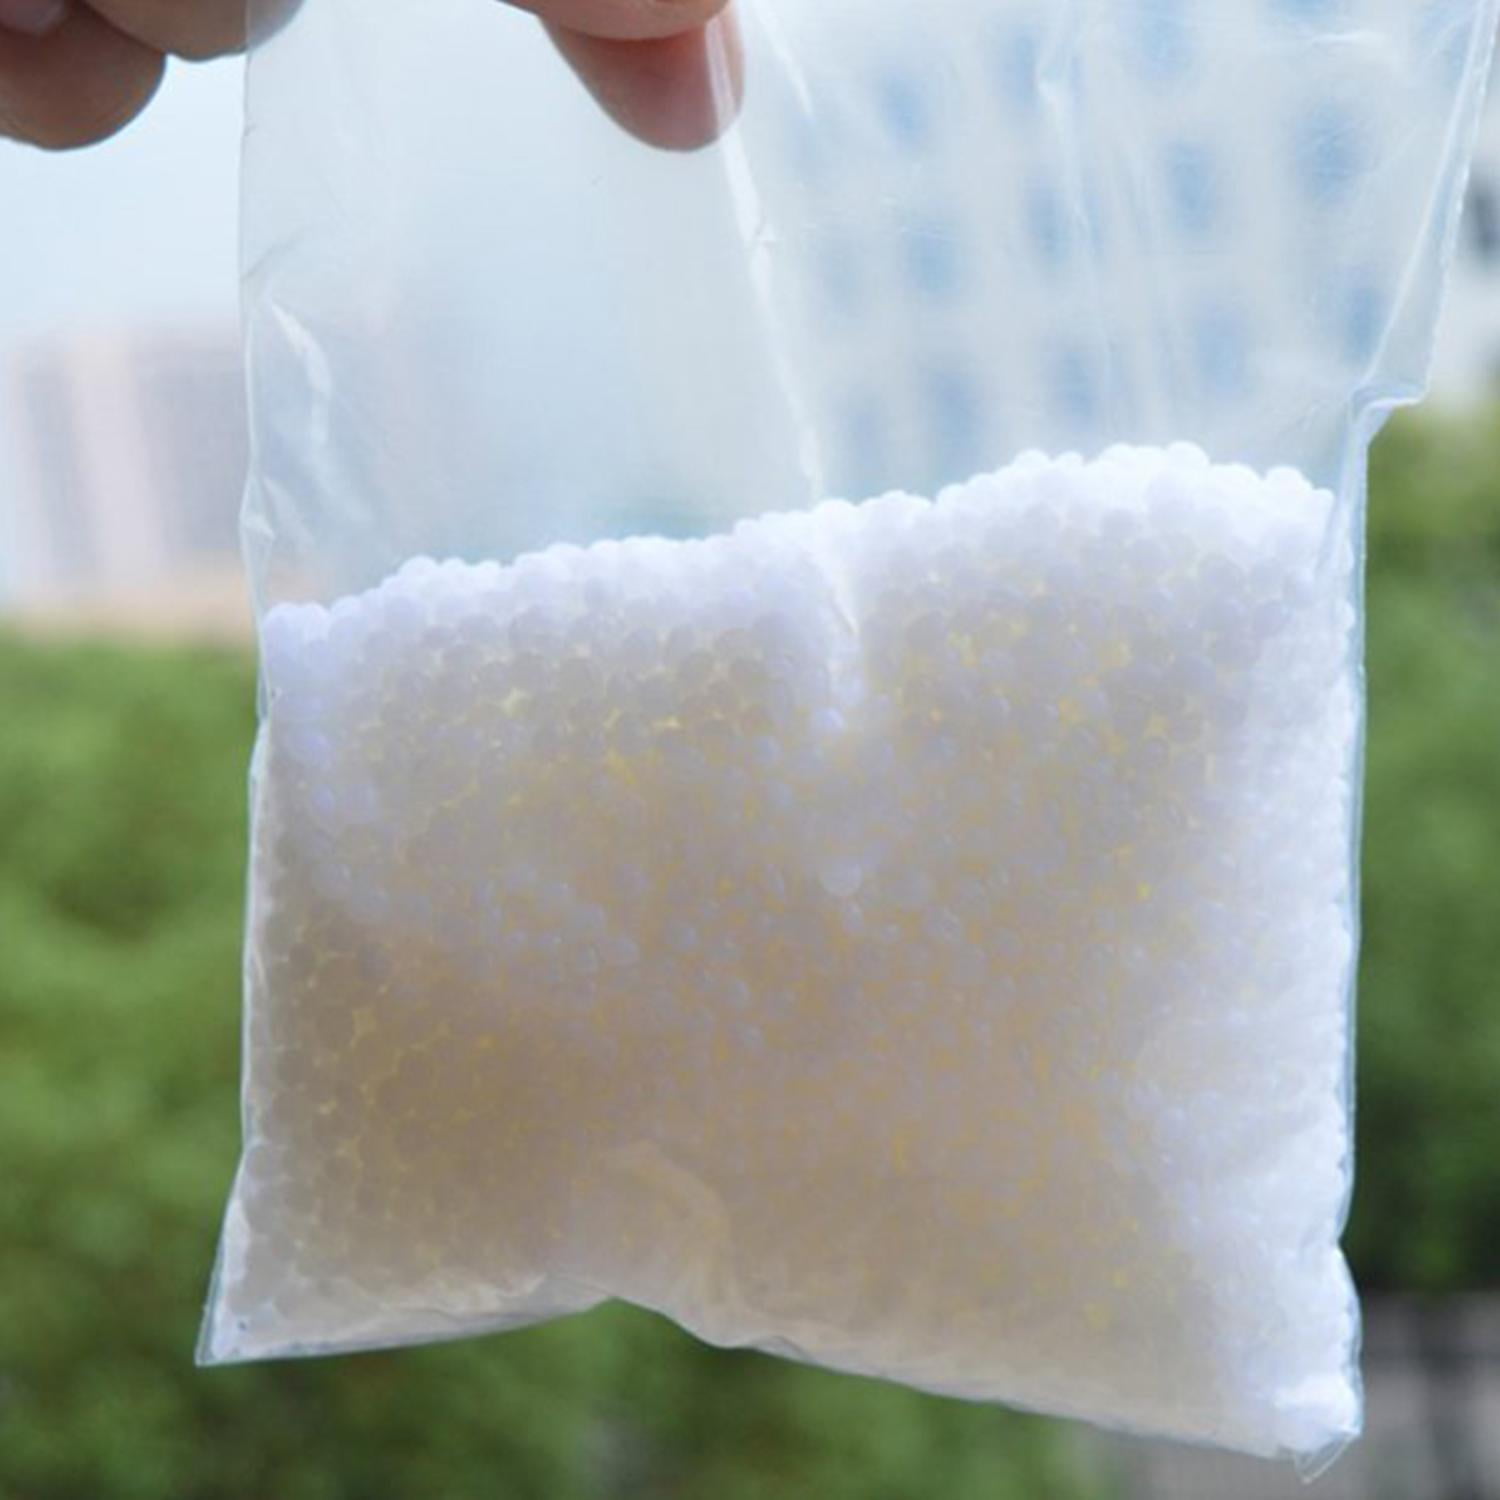 HI-US Adult Unisex 100g Reusable Moldable Plastic Thermoplastic